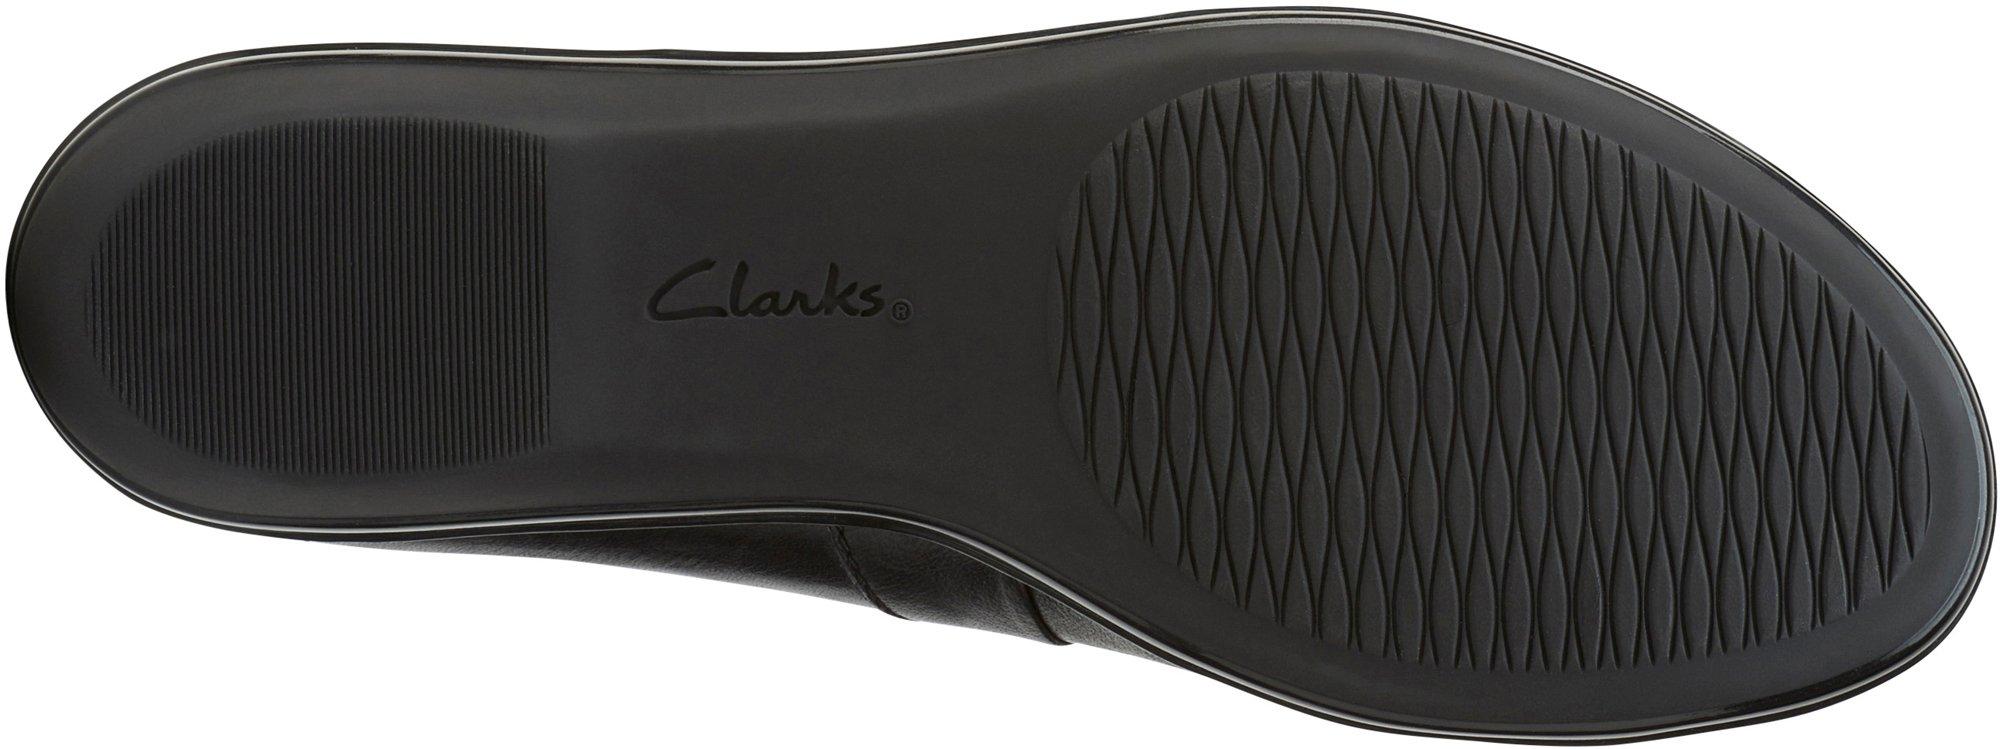 clarks everlay iris women's shoes